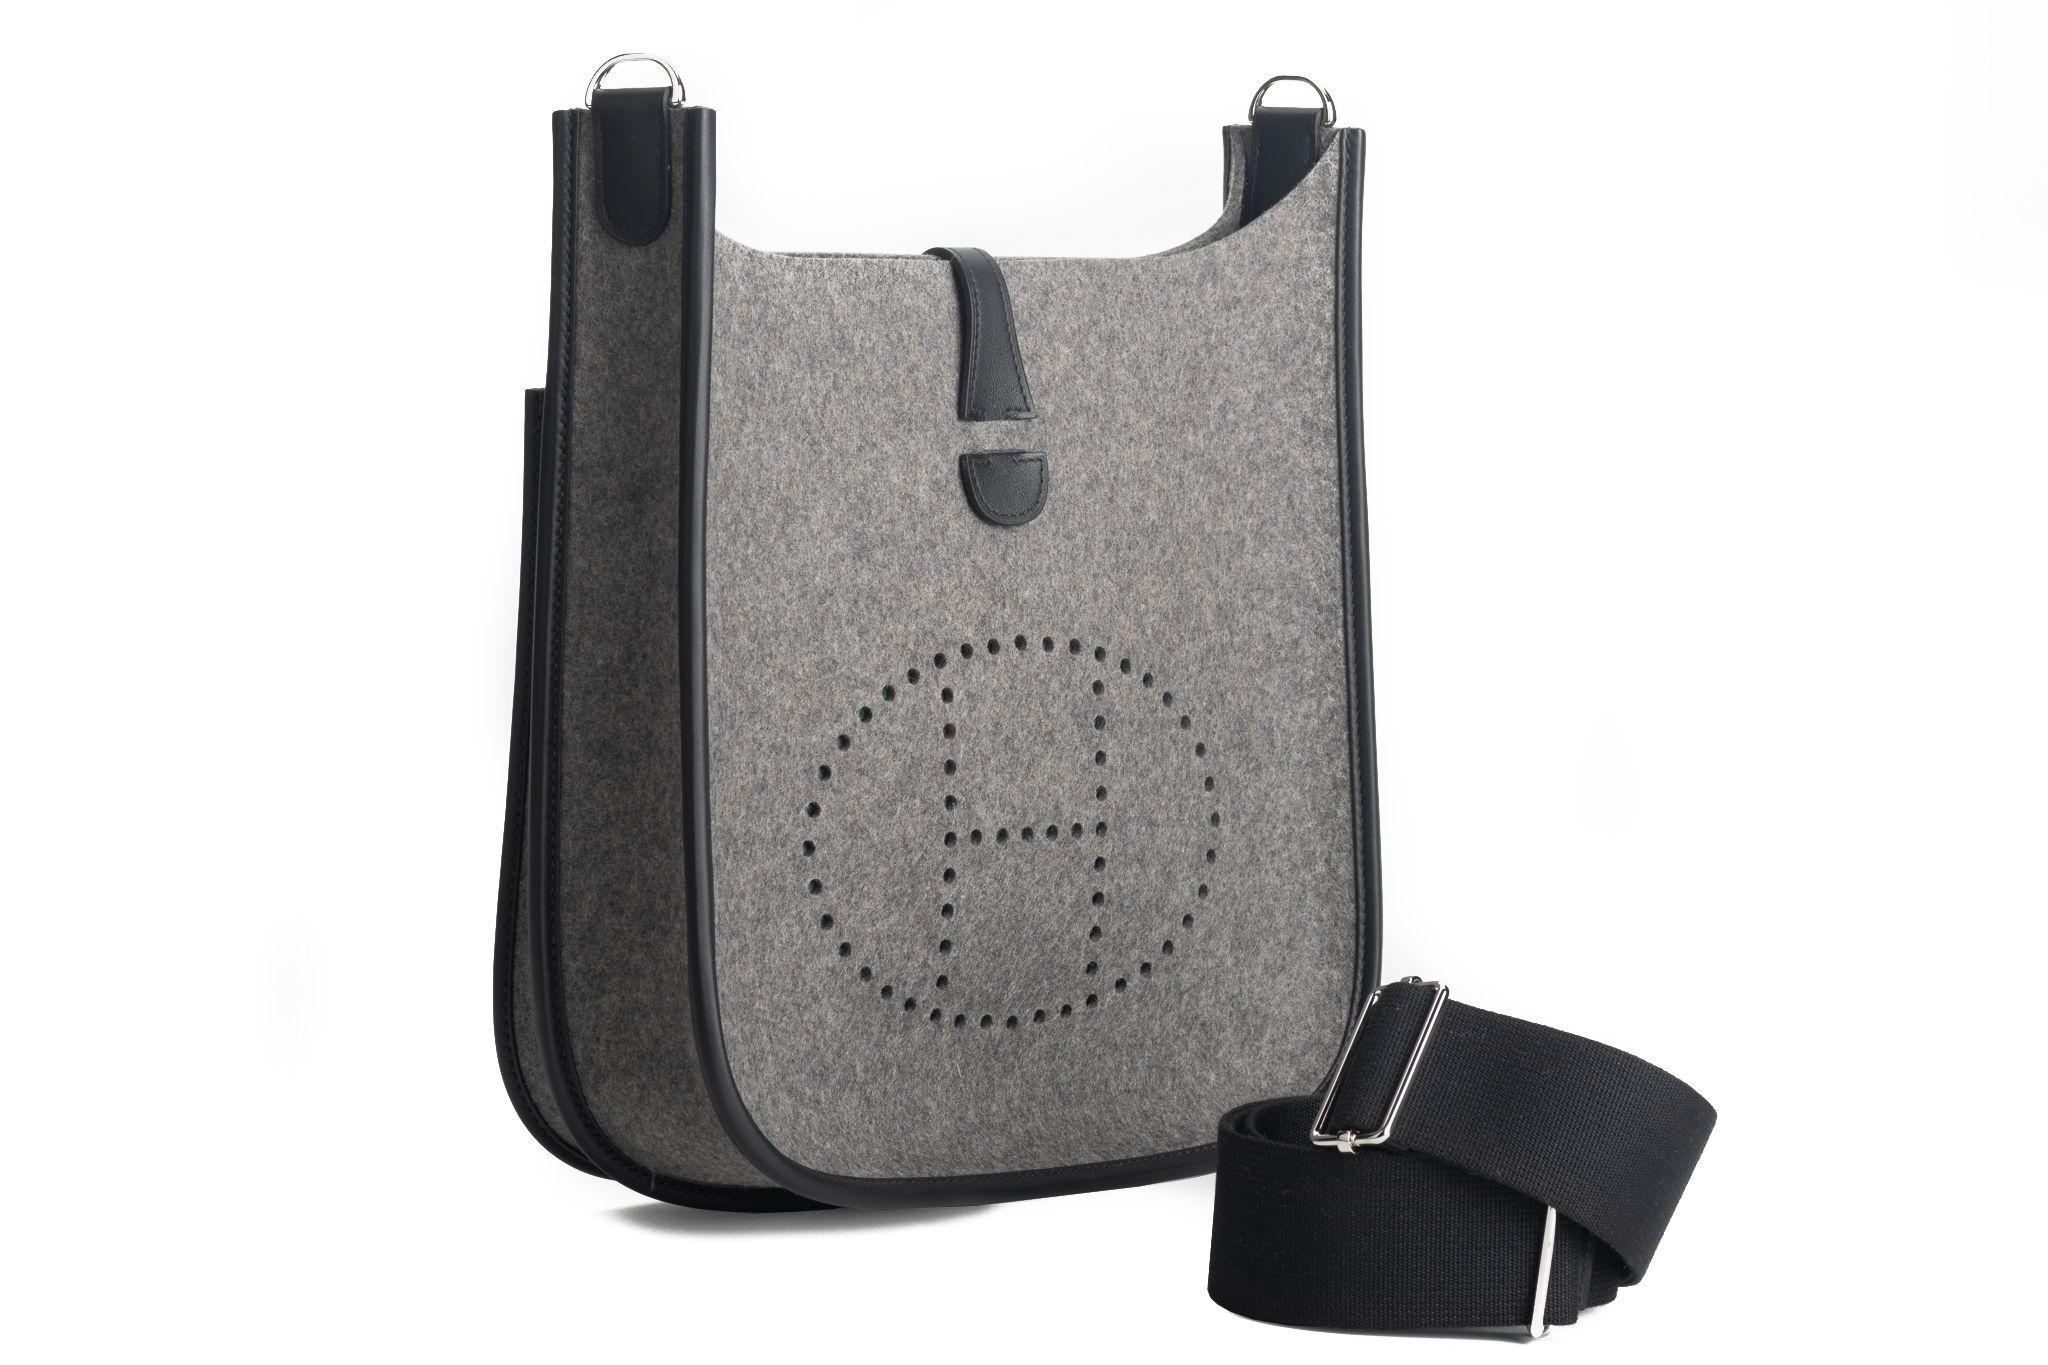 Hermès Evelyne bag in gray made of felt and with a black shoulder strap (23